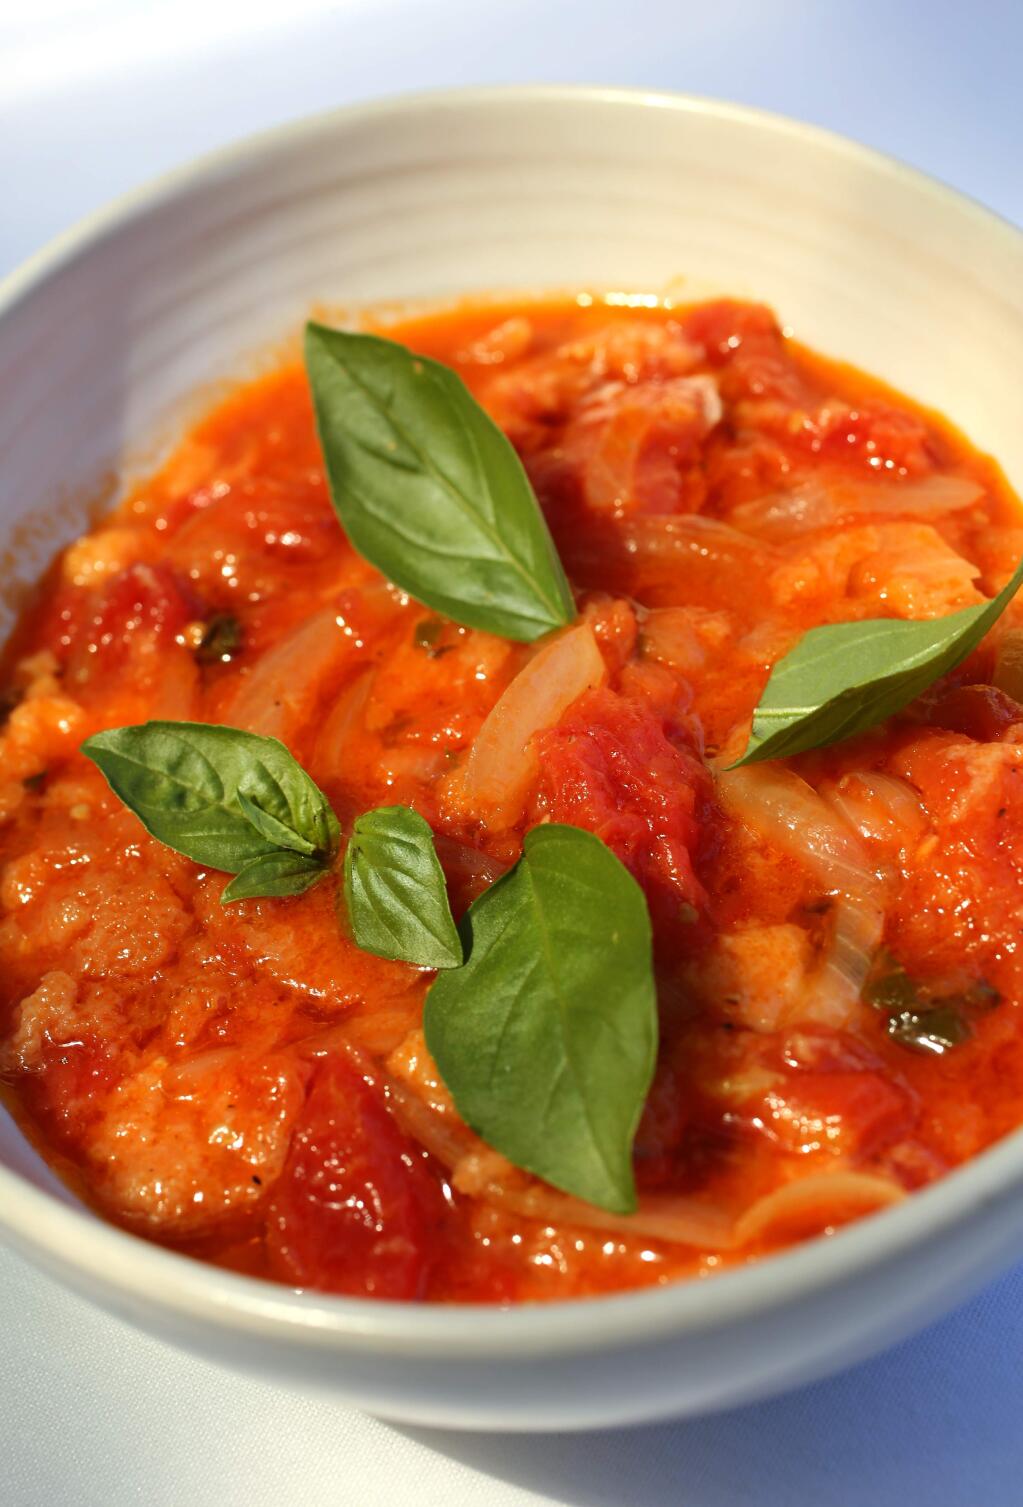 Tuscan Tomato and Bread Soup made at Bistro Don Giovanni restaurant in Napa, Friday, July 18, 2014. (Crista Jeremiason / The Press Democrat)